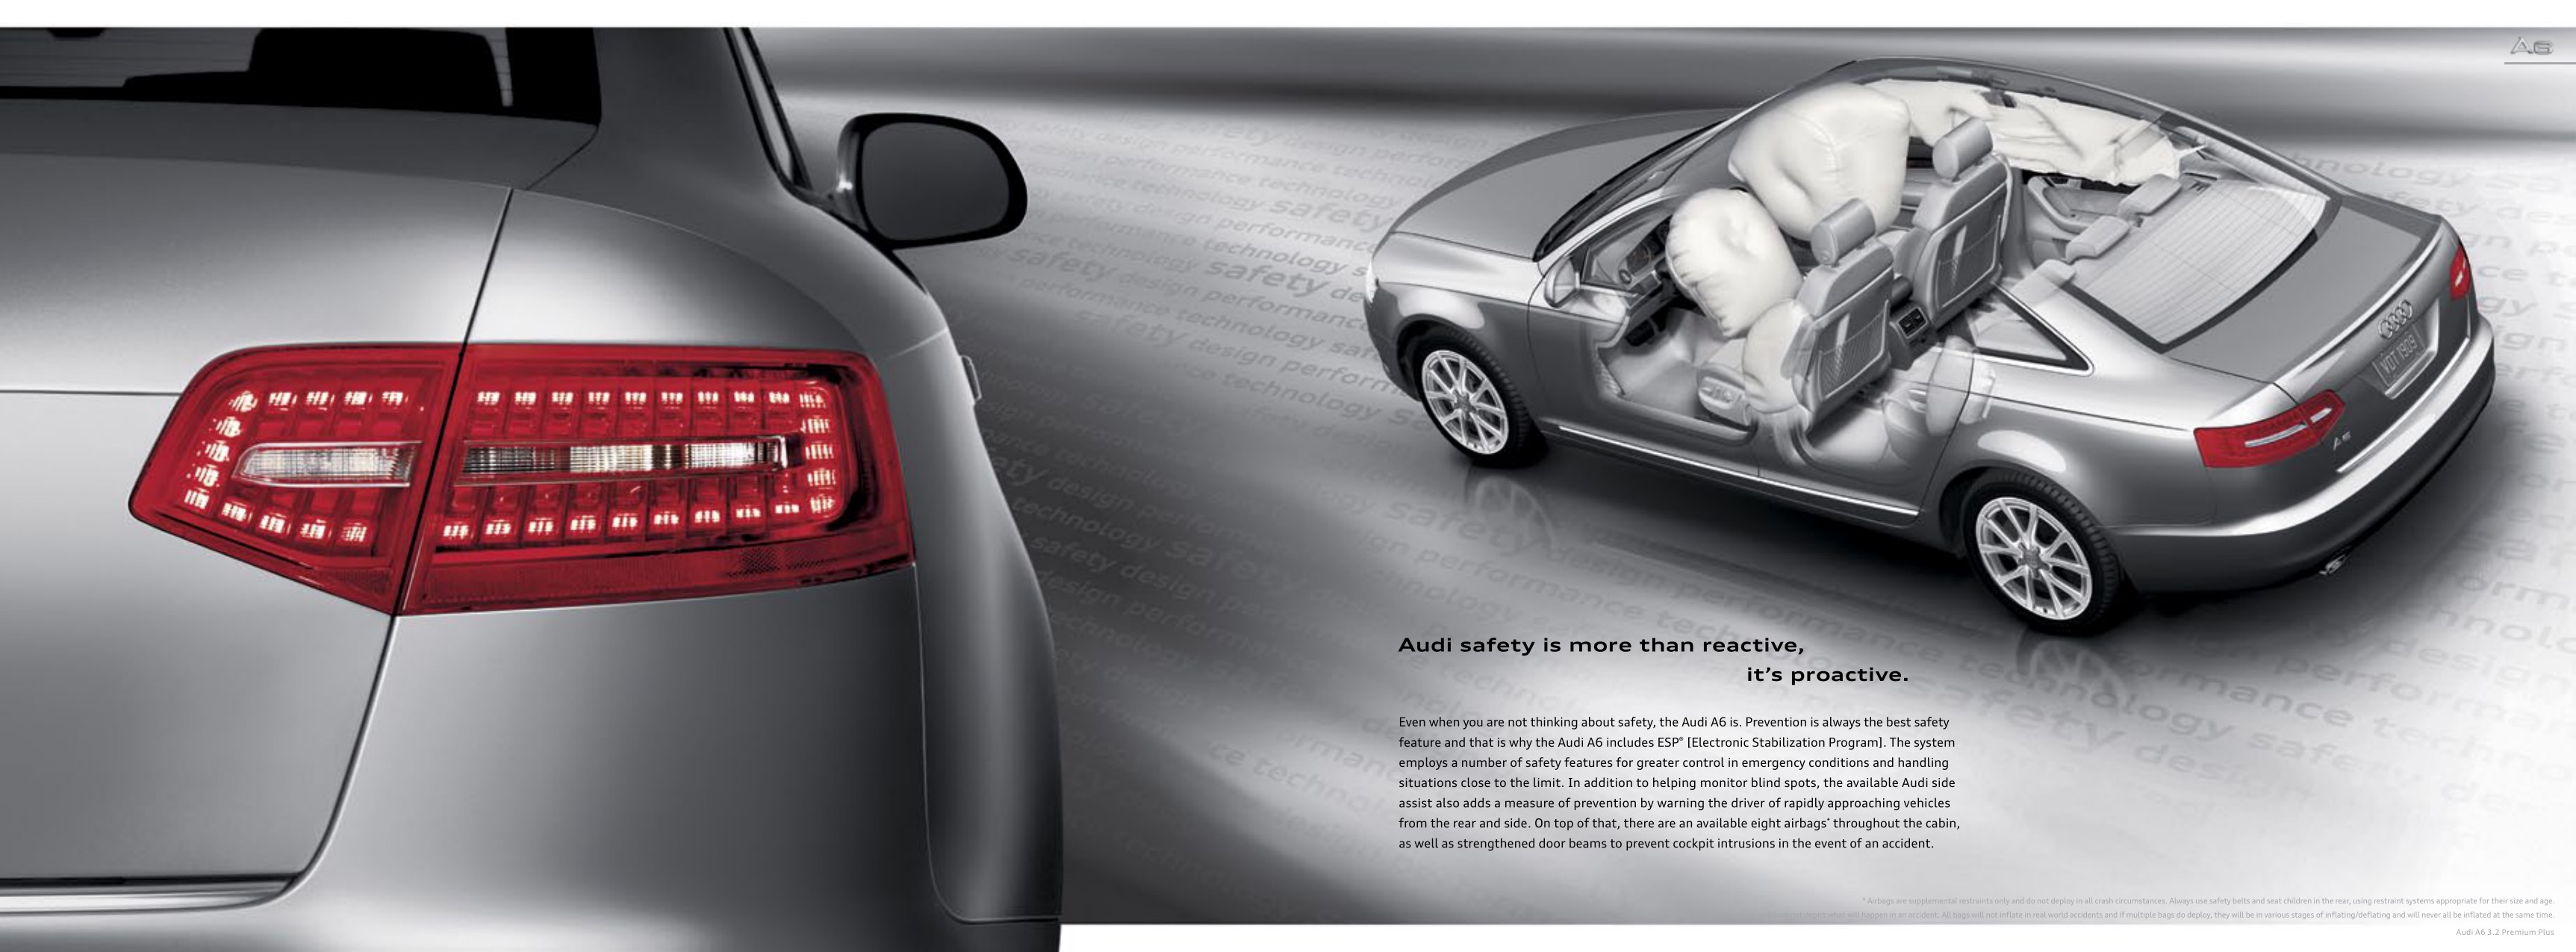 2010 Audi A6 Brochure Page 28